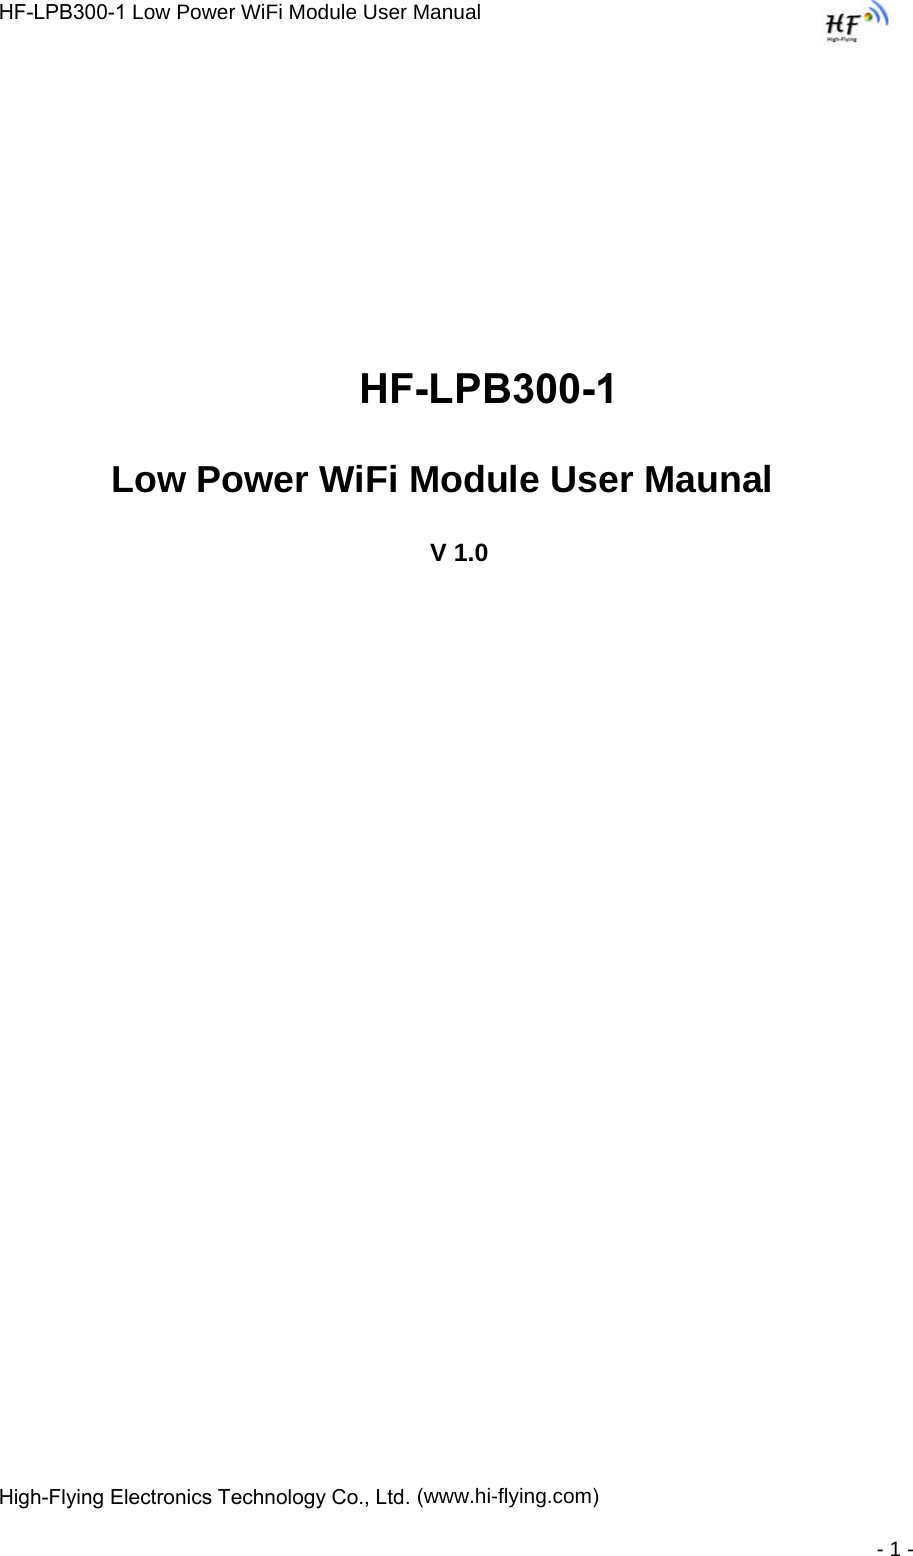 HF-LPB300-1 Low Power WiFi Module User Manual High-Flying Electronics Technology Co., Ltd. (www.hi-flying.com) - 1 - HF-LPB300-1  Low Power WiFi Module User Maunal    V 1.0 